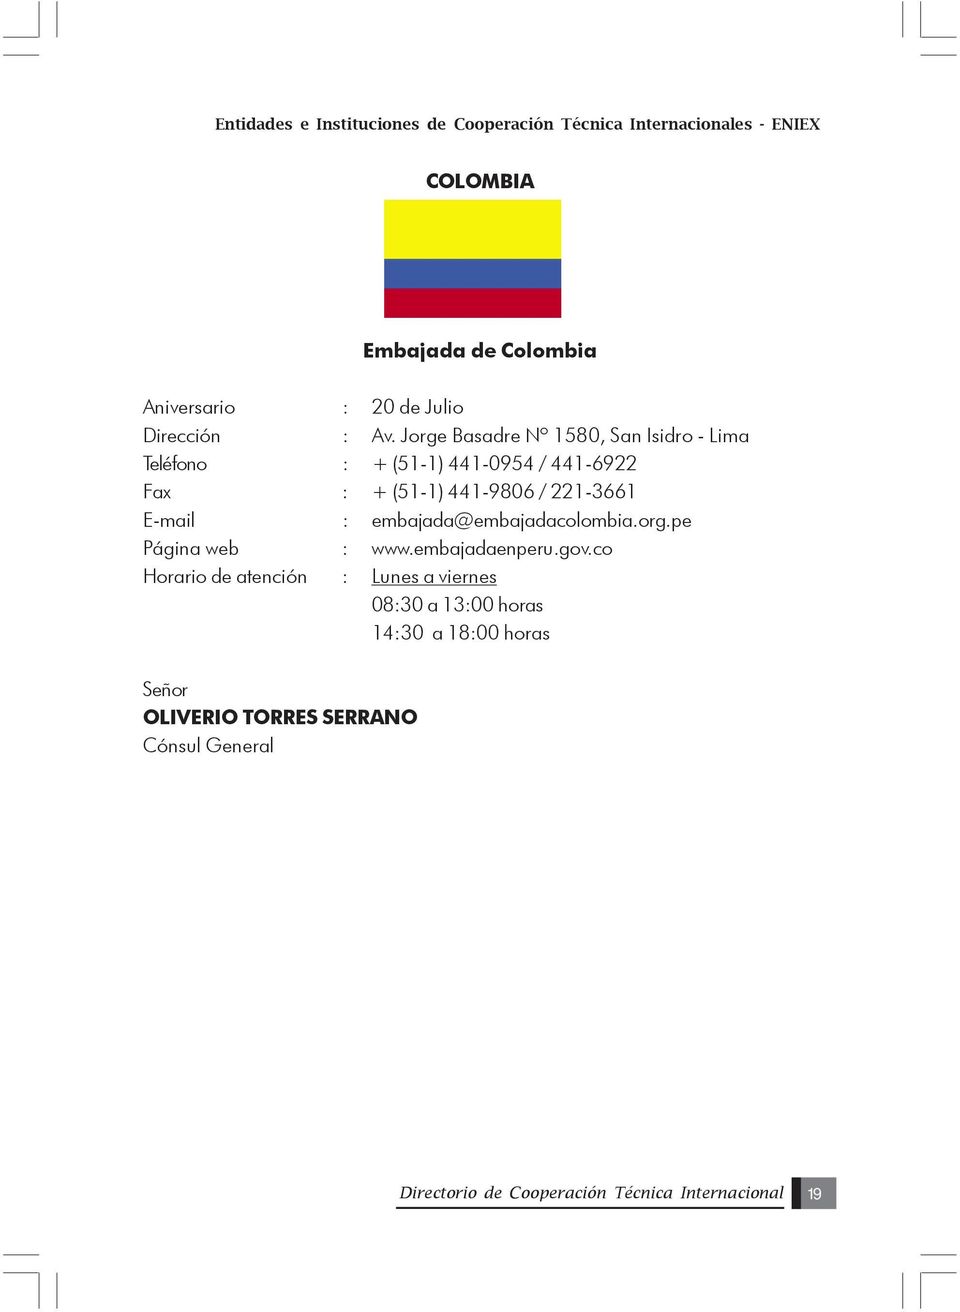 Jorge Basadre Nº 1580, San Isidro - Lima Teléfono : + (51-1) 441-0954 / 441-6922 Fax : + (51-1) 441-9806 / 221-3661 E-mail :